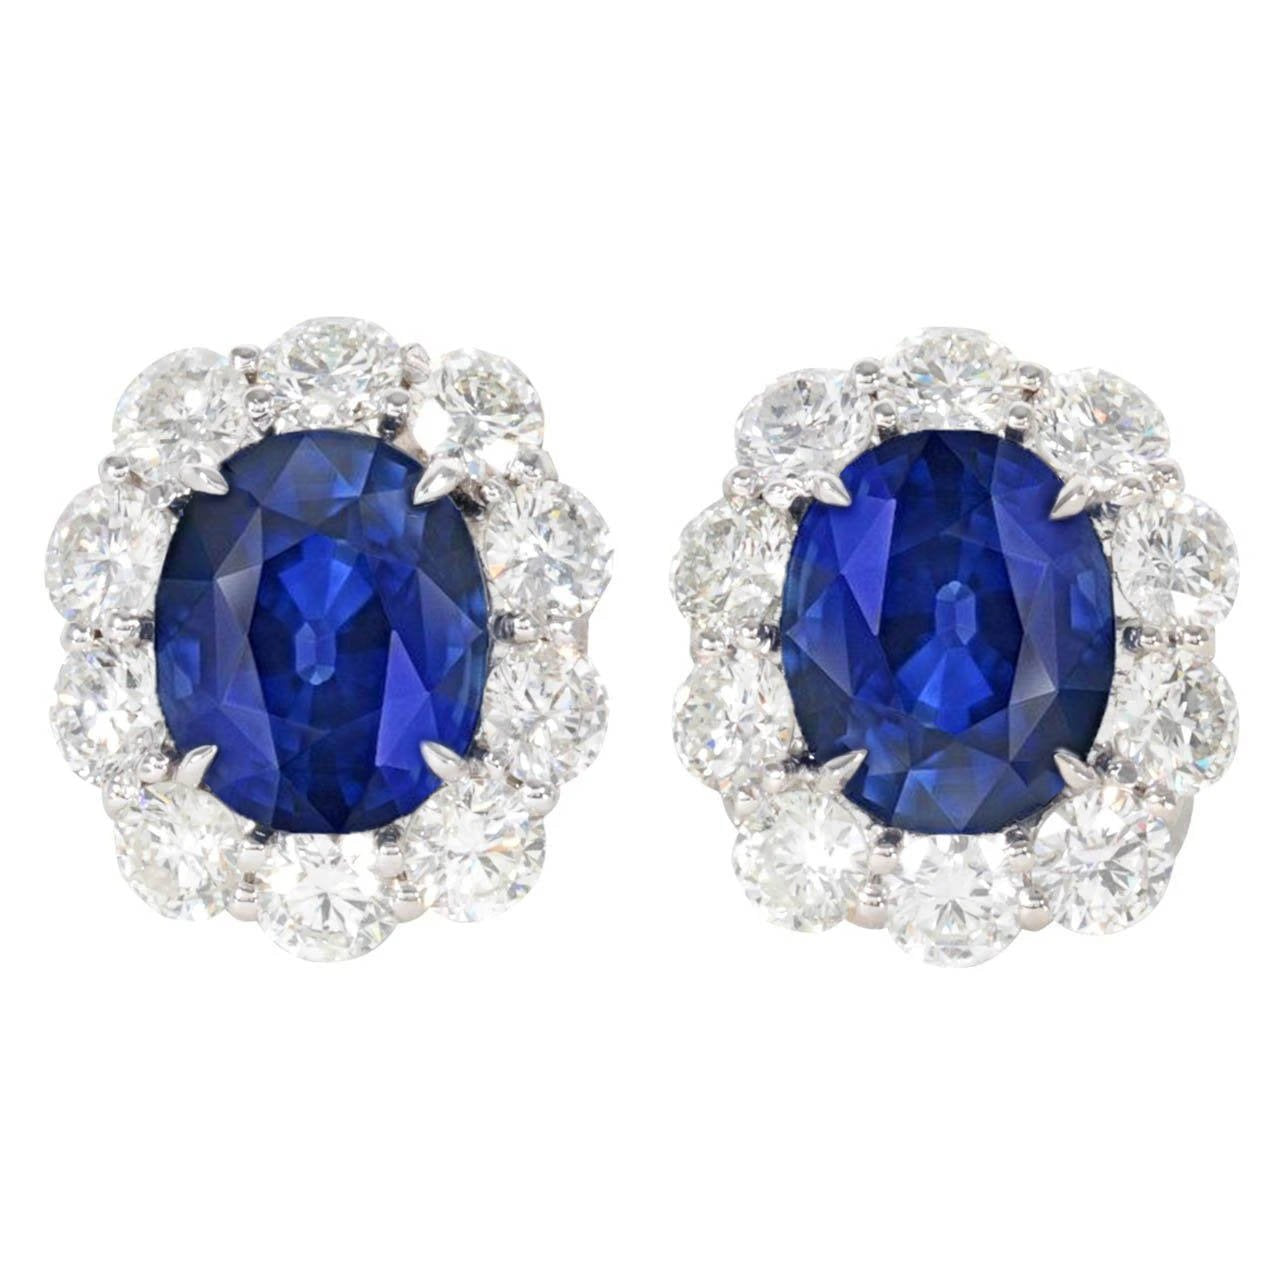 Oval Ceylon Sapphire And Round Cut 6 Carats Diamonds Studs Earrings